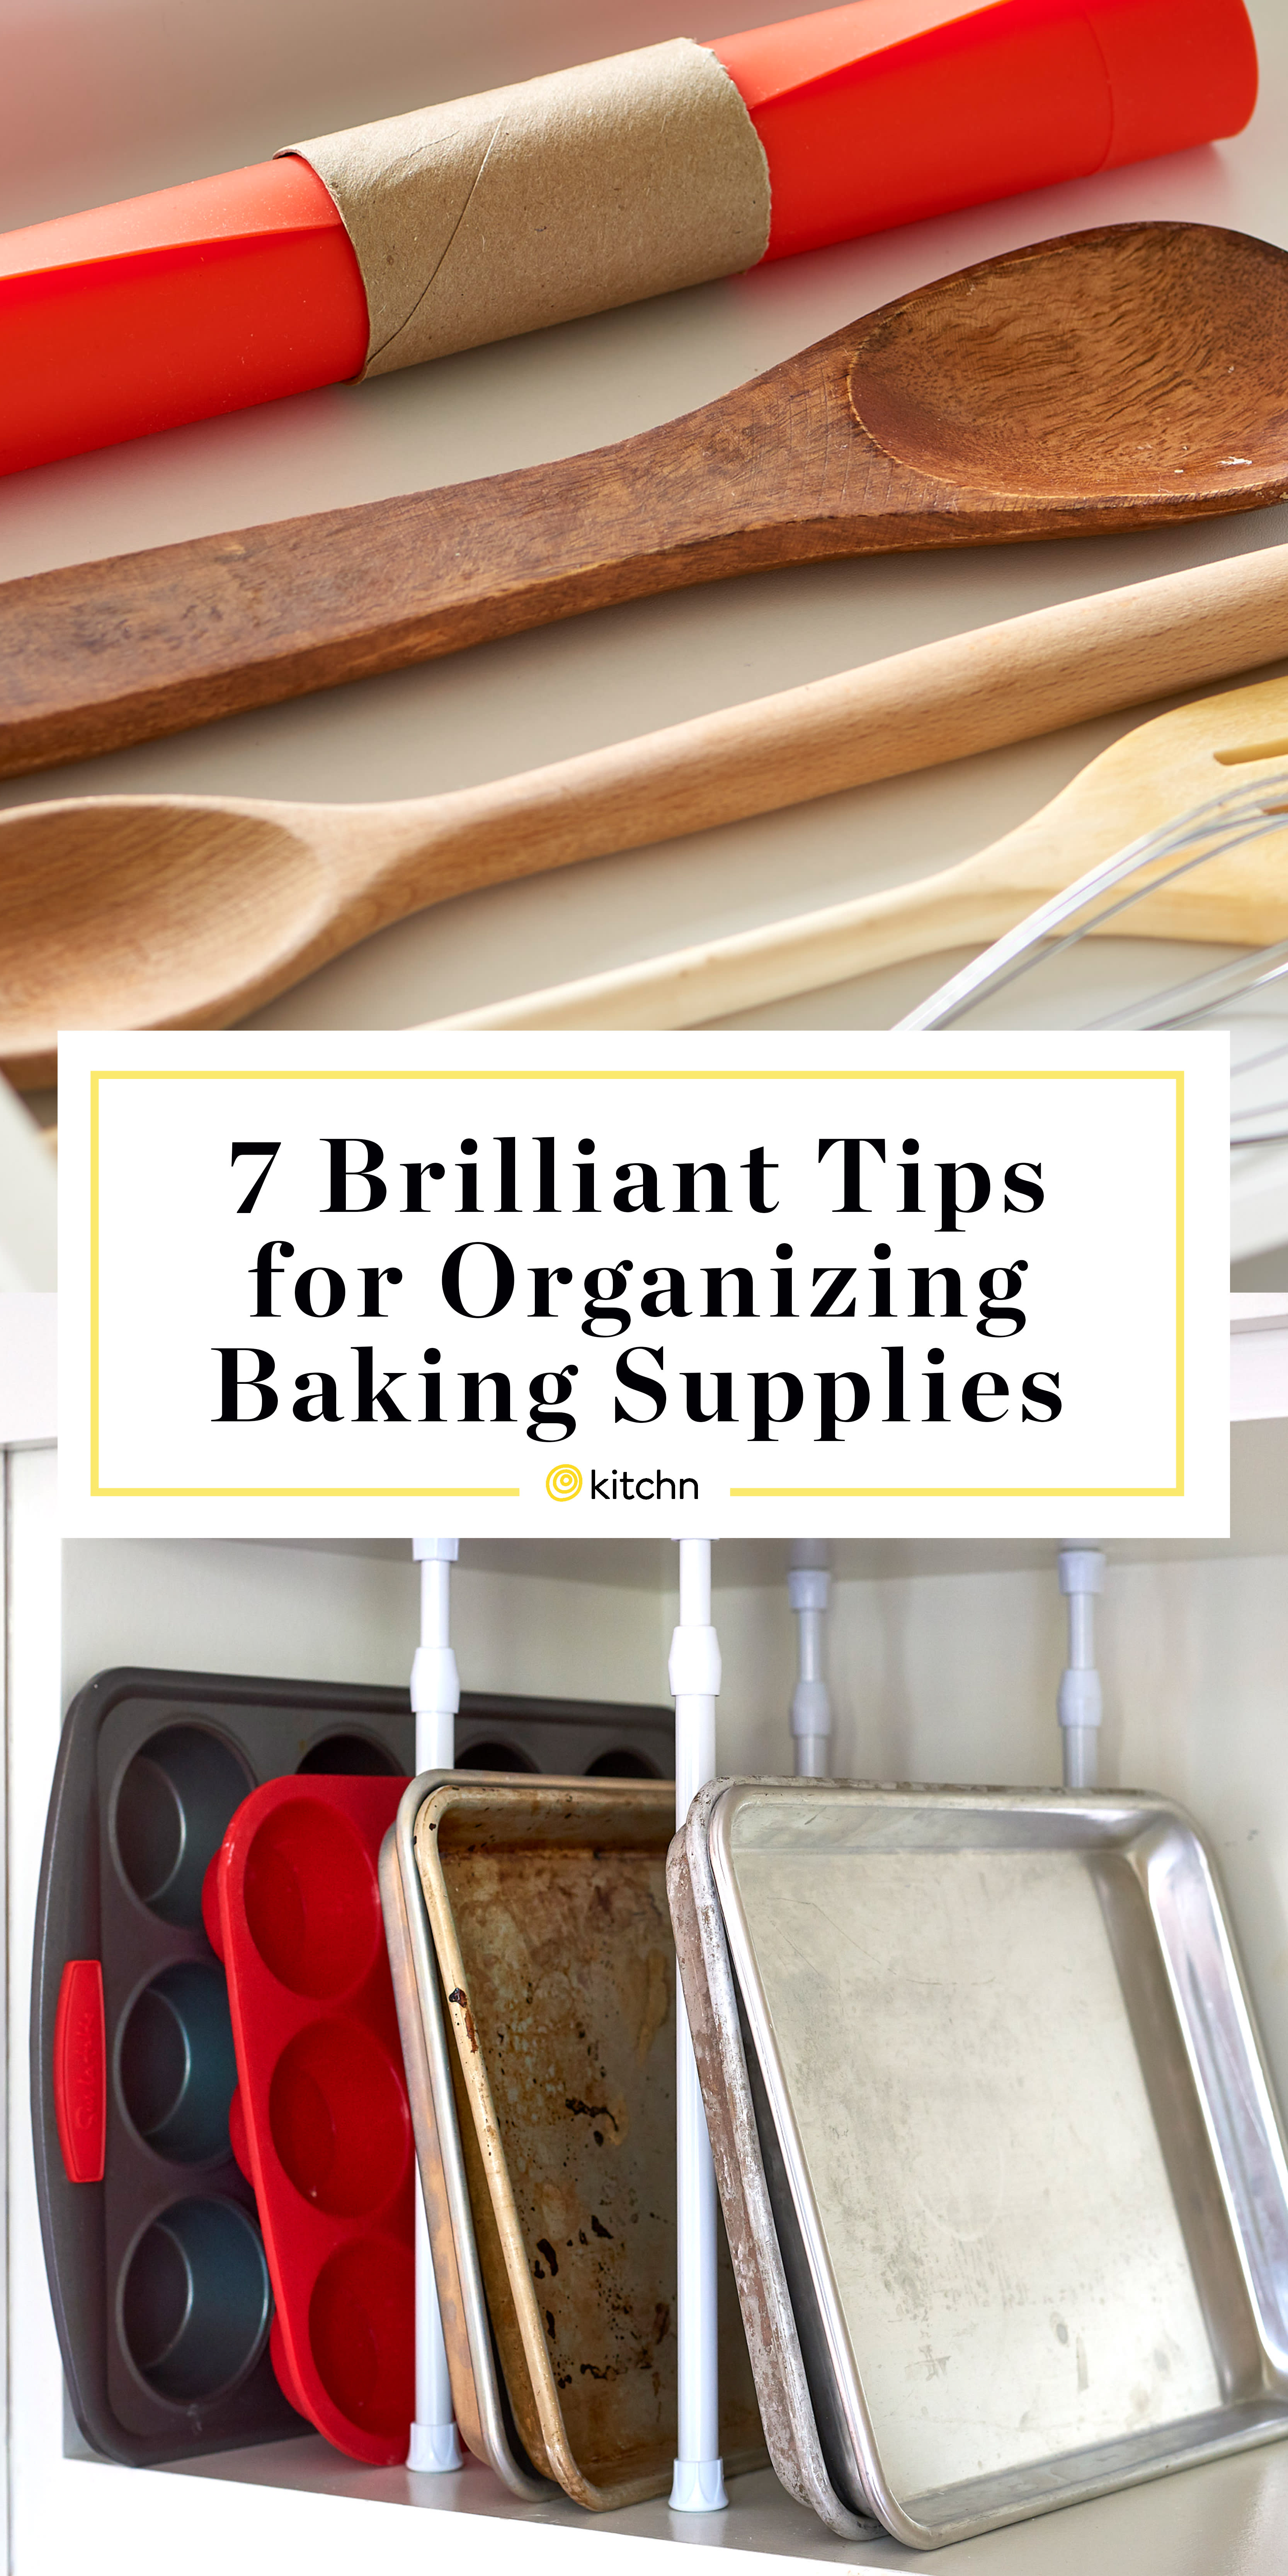 7 Tips for Organizing Baking Supplies - The Baker's Almanac